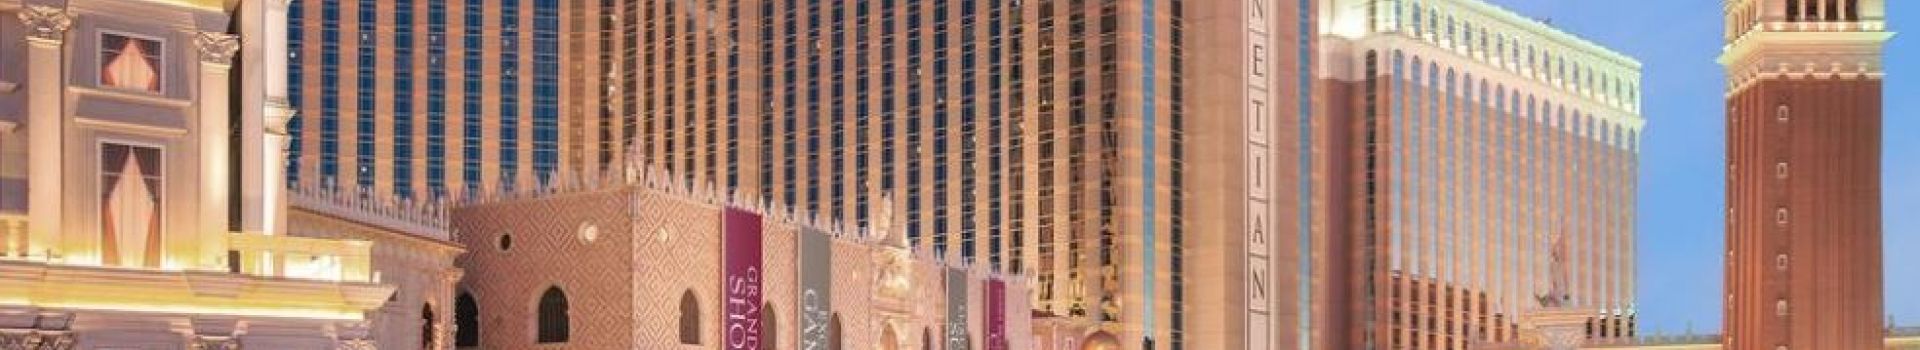 The Venetian Resort - Las Vegas Holidays